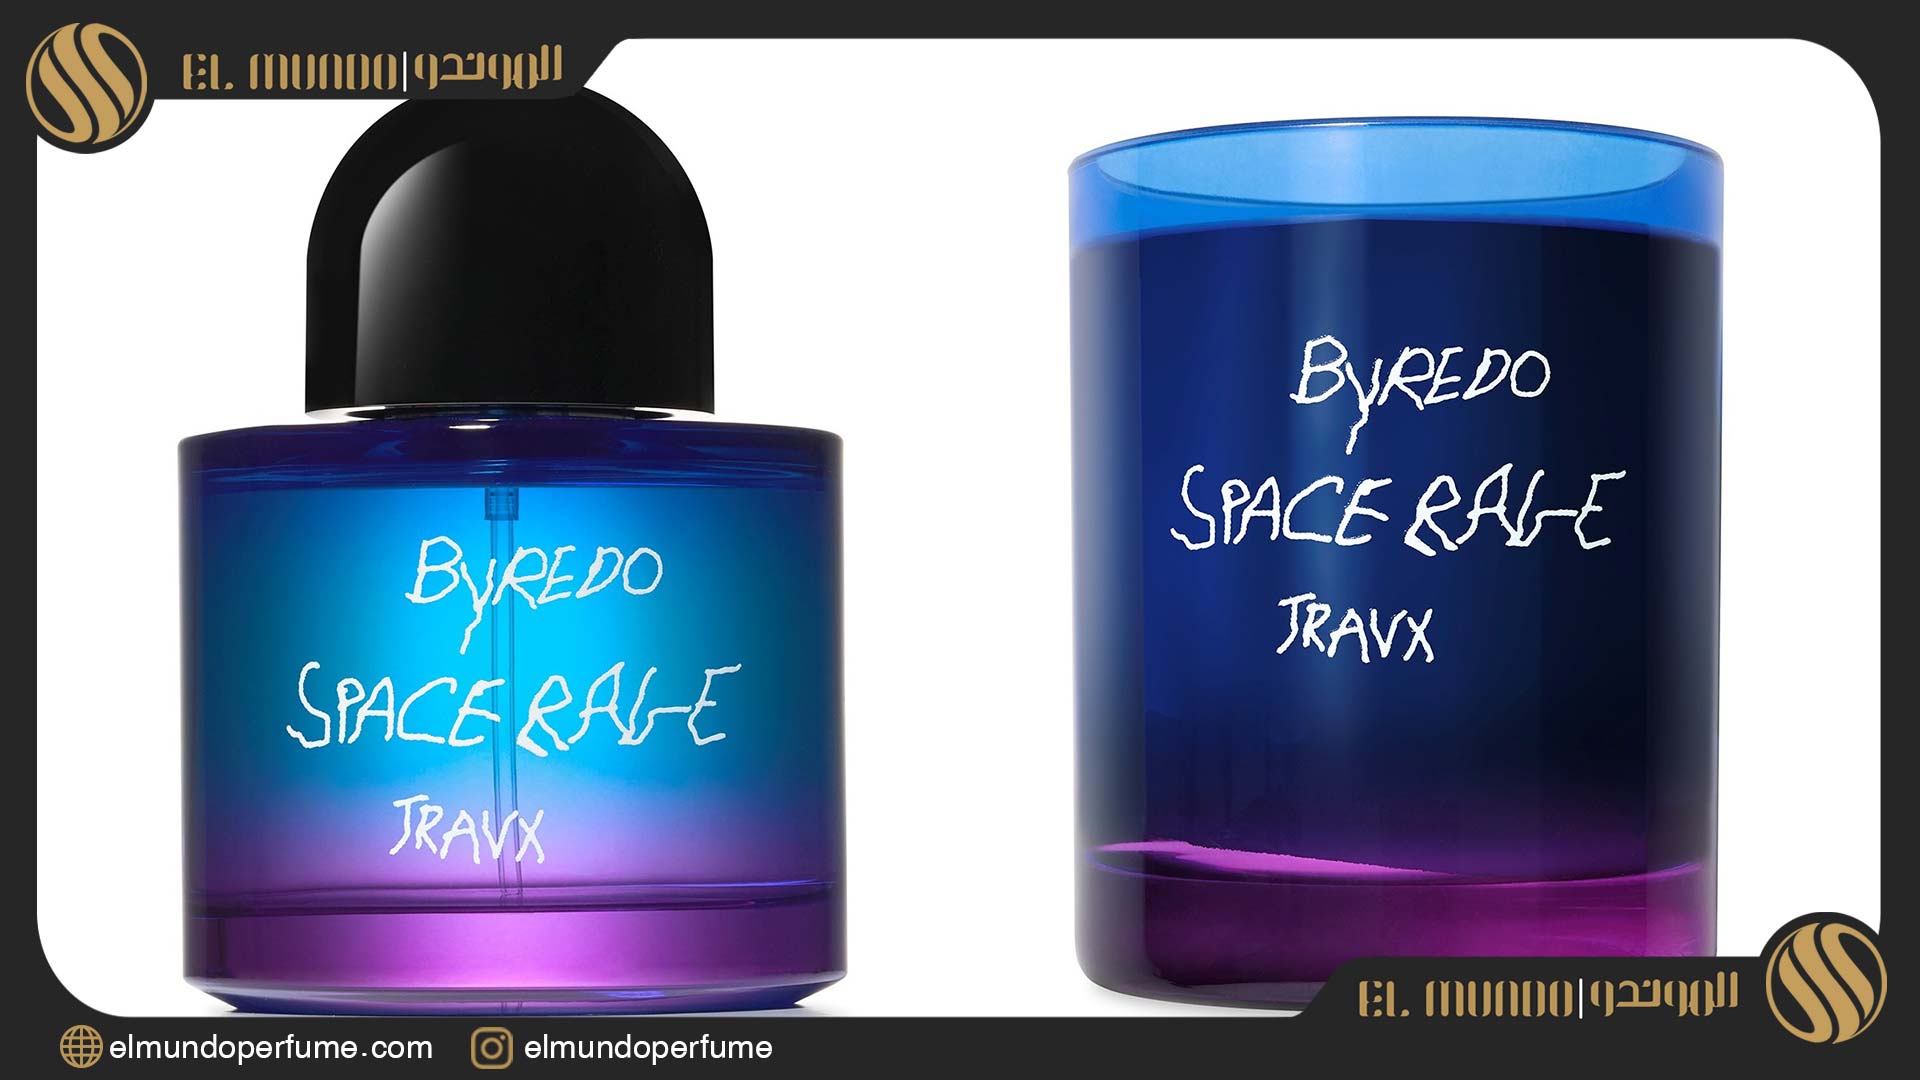 Space Rage Travx Byredo for women and men 1 - معرفی عطر ادکلن بایردو اسپیس رج تراویس